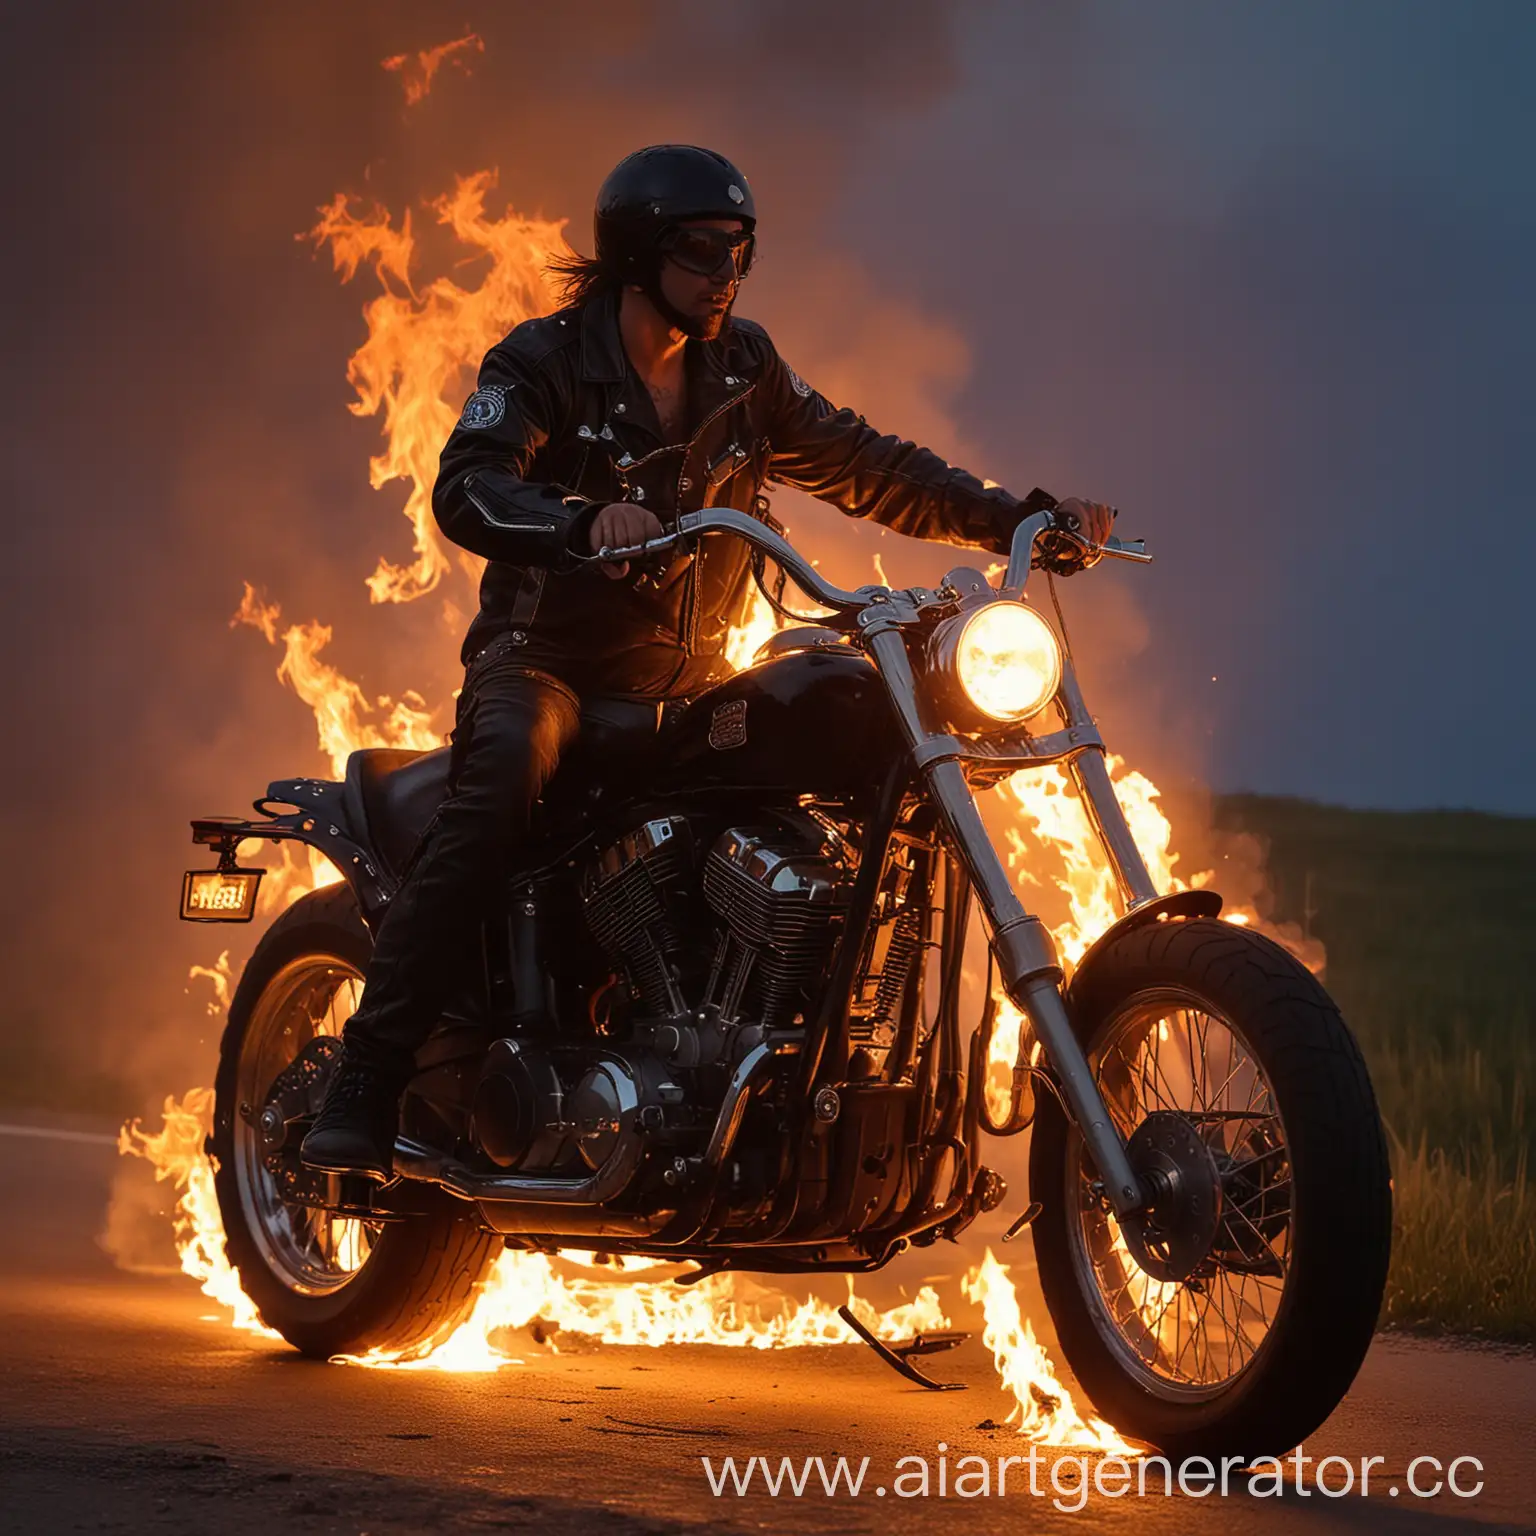 Rocker-Biker-Riding-Motorcycle-at-Dusk-with-Fiery-Sky